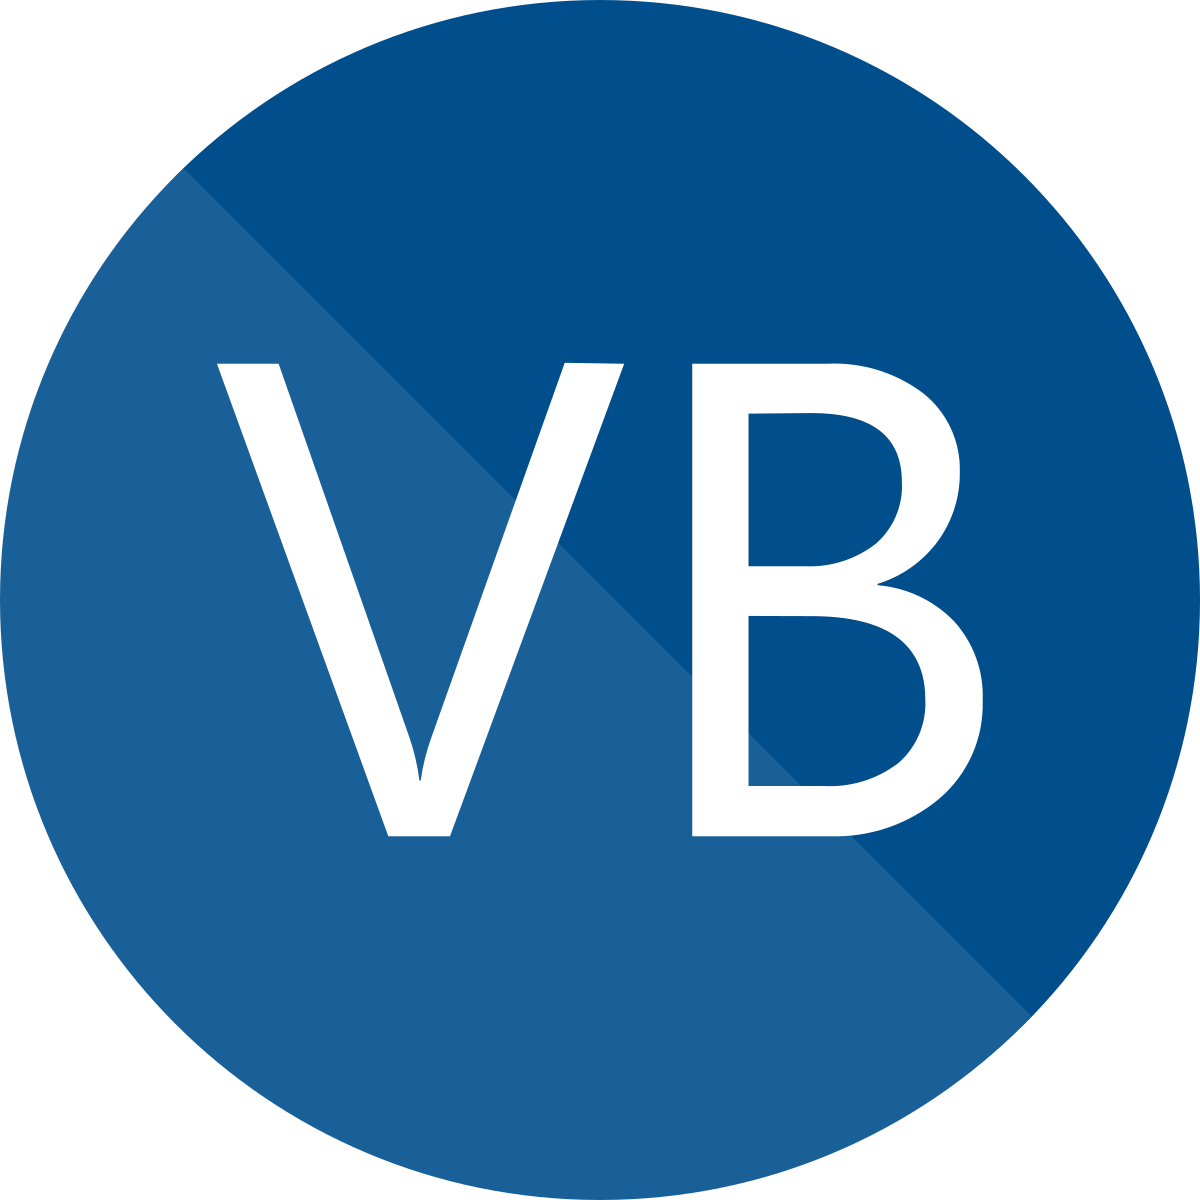 VB Dotnet logo - Bluebird